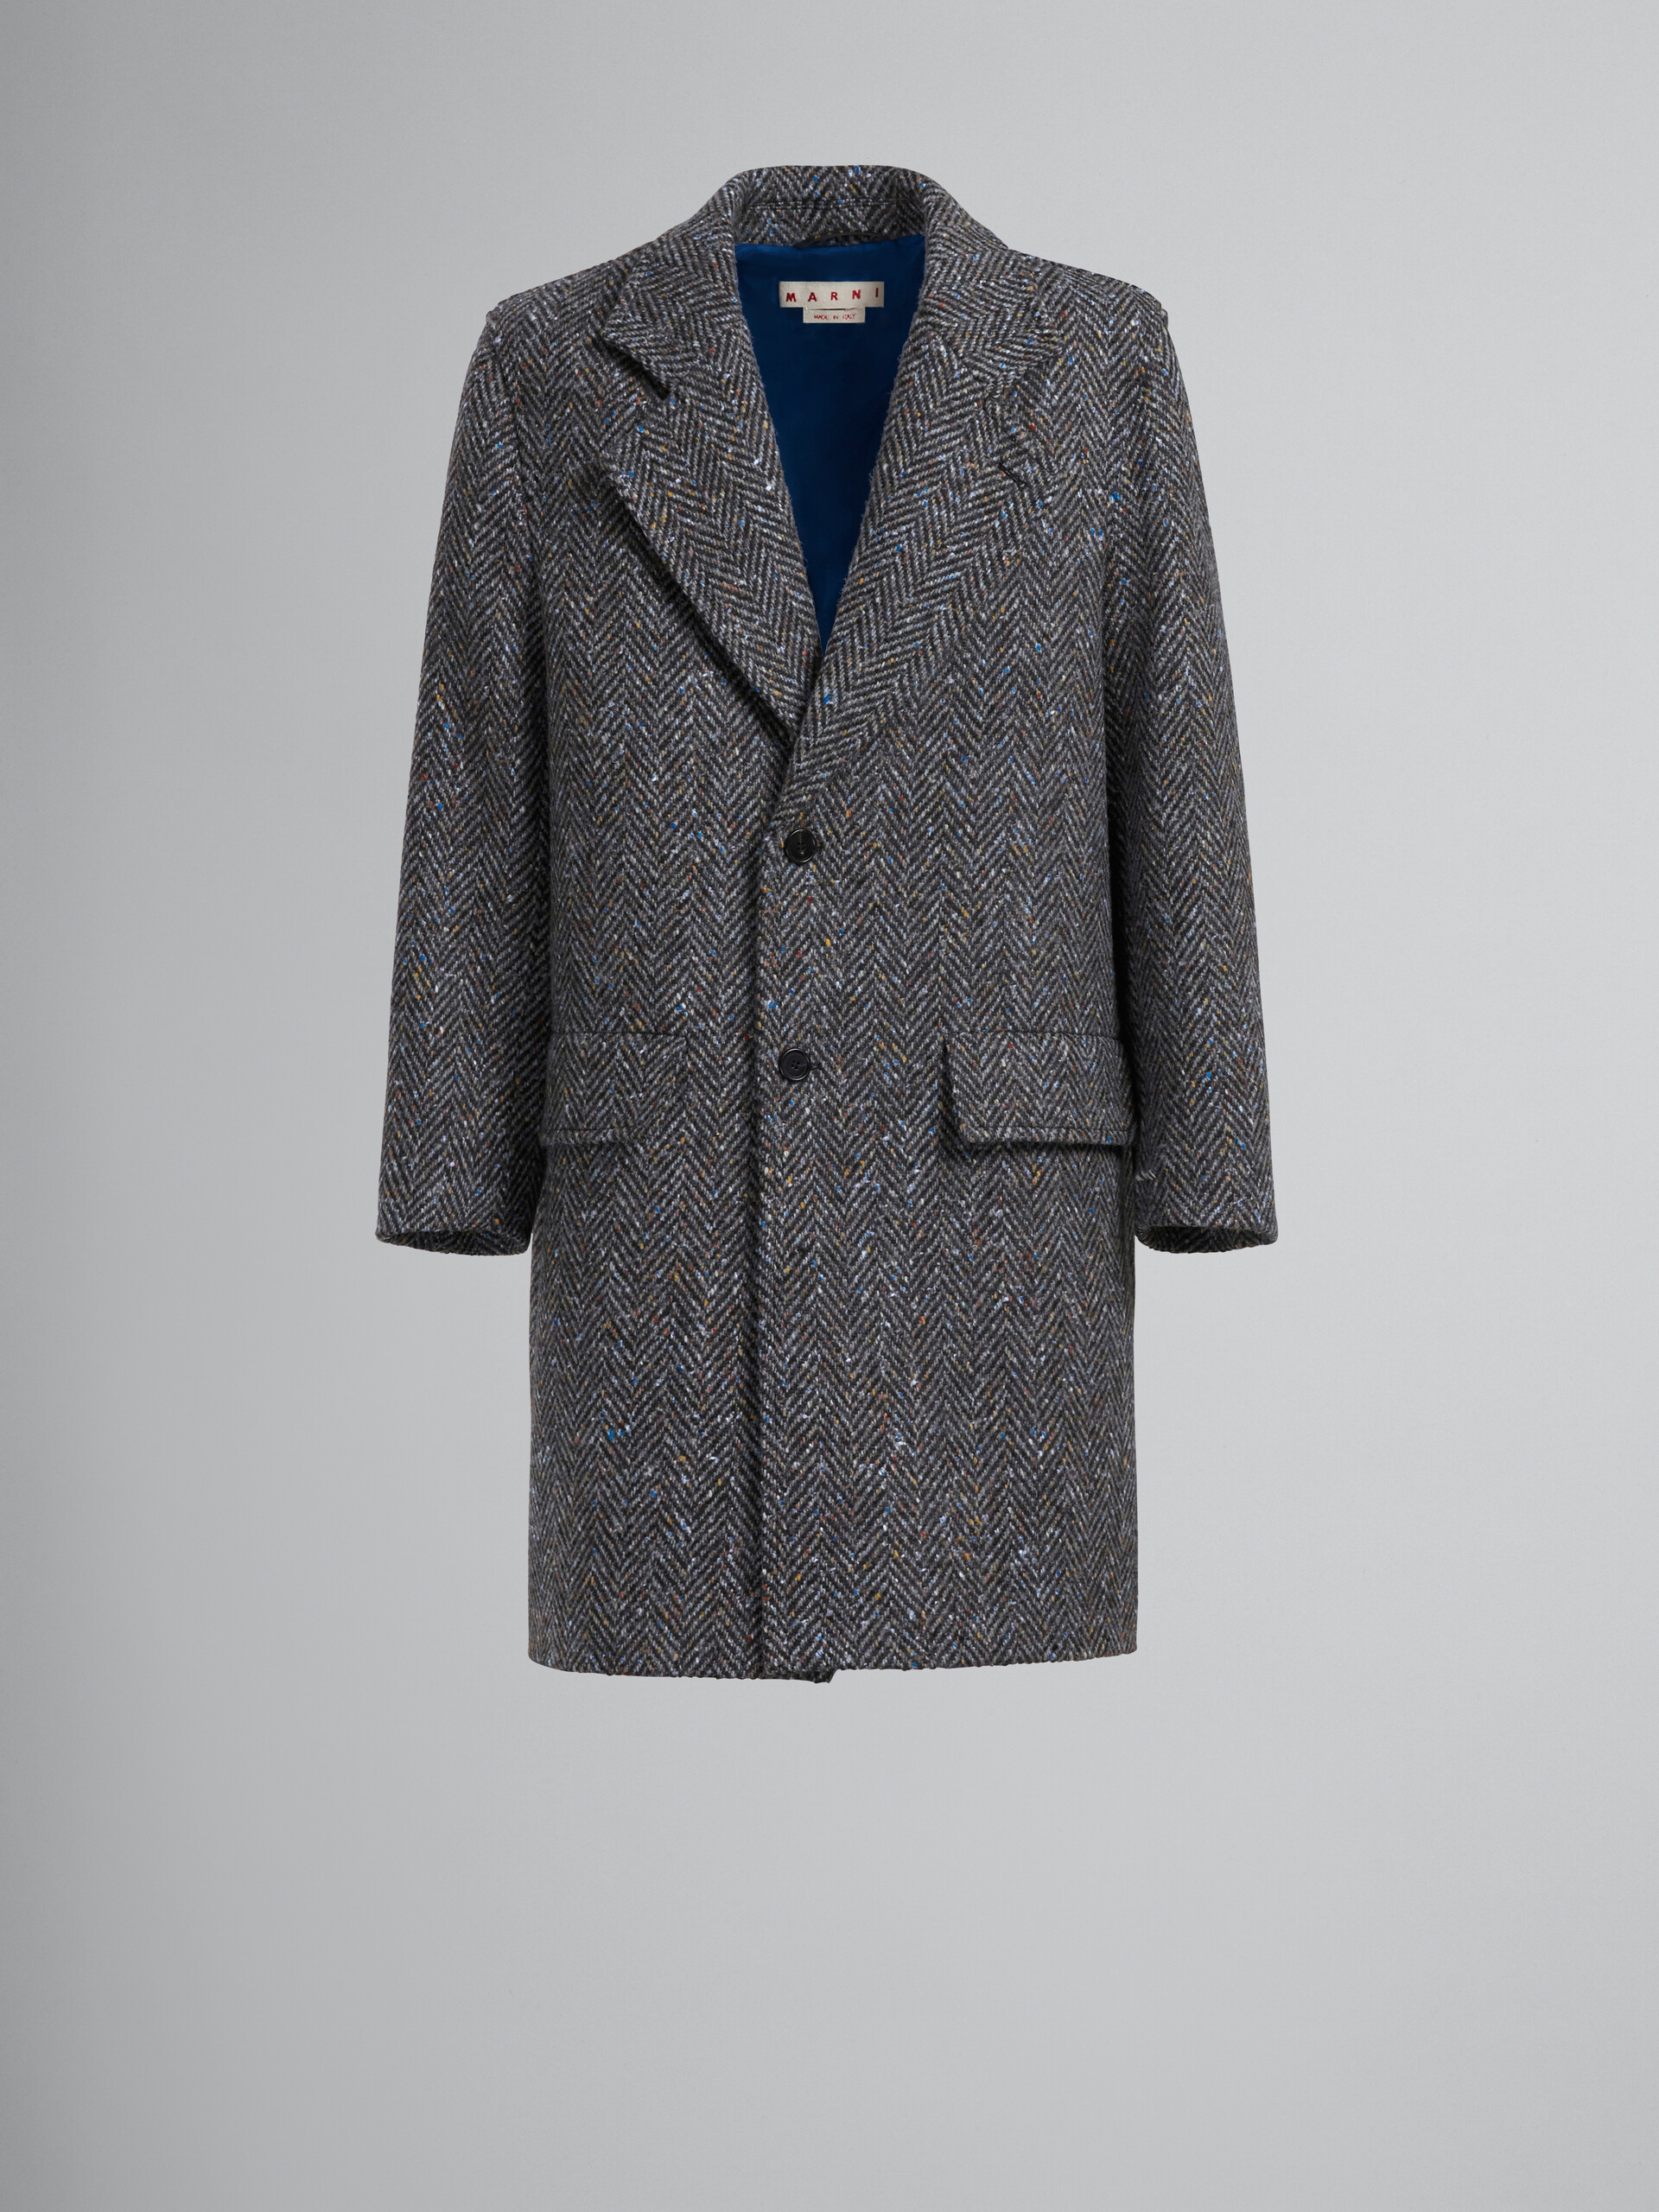 Grey chevron wool coat - Coats - Image 1